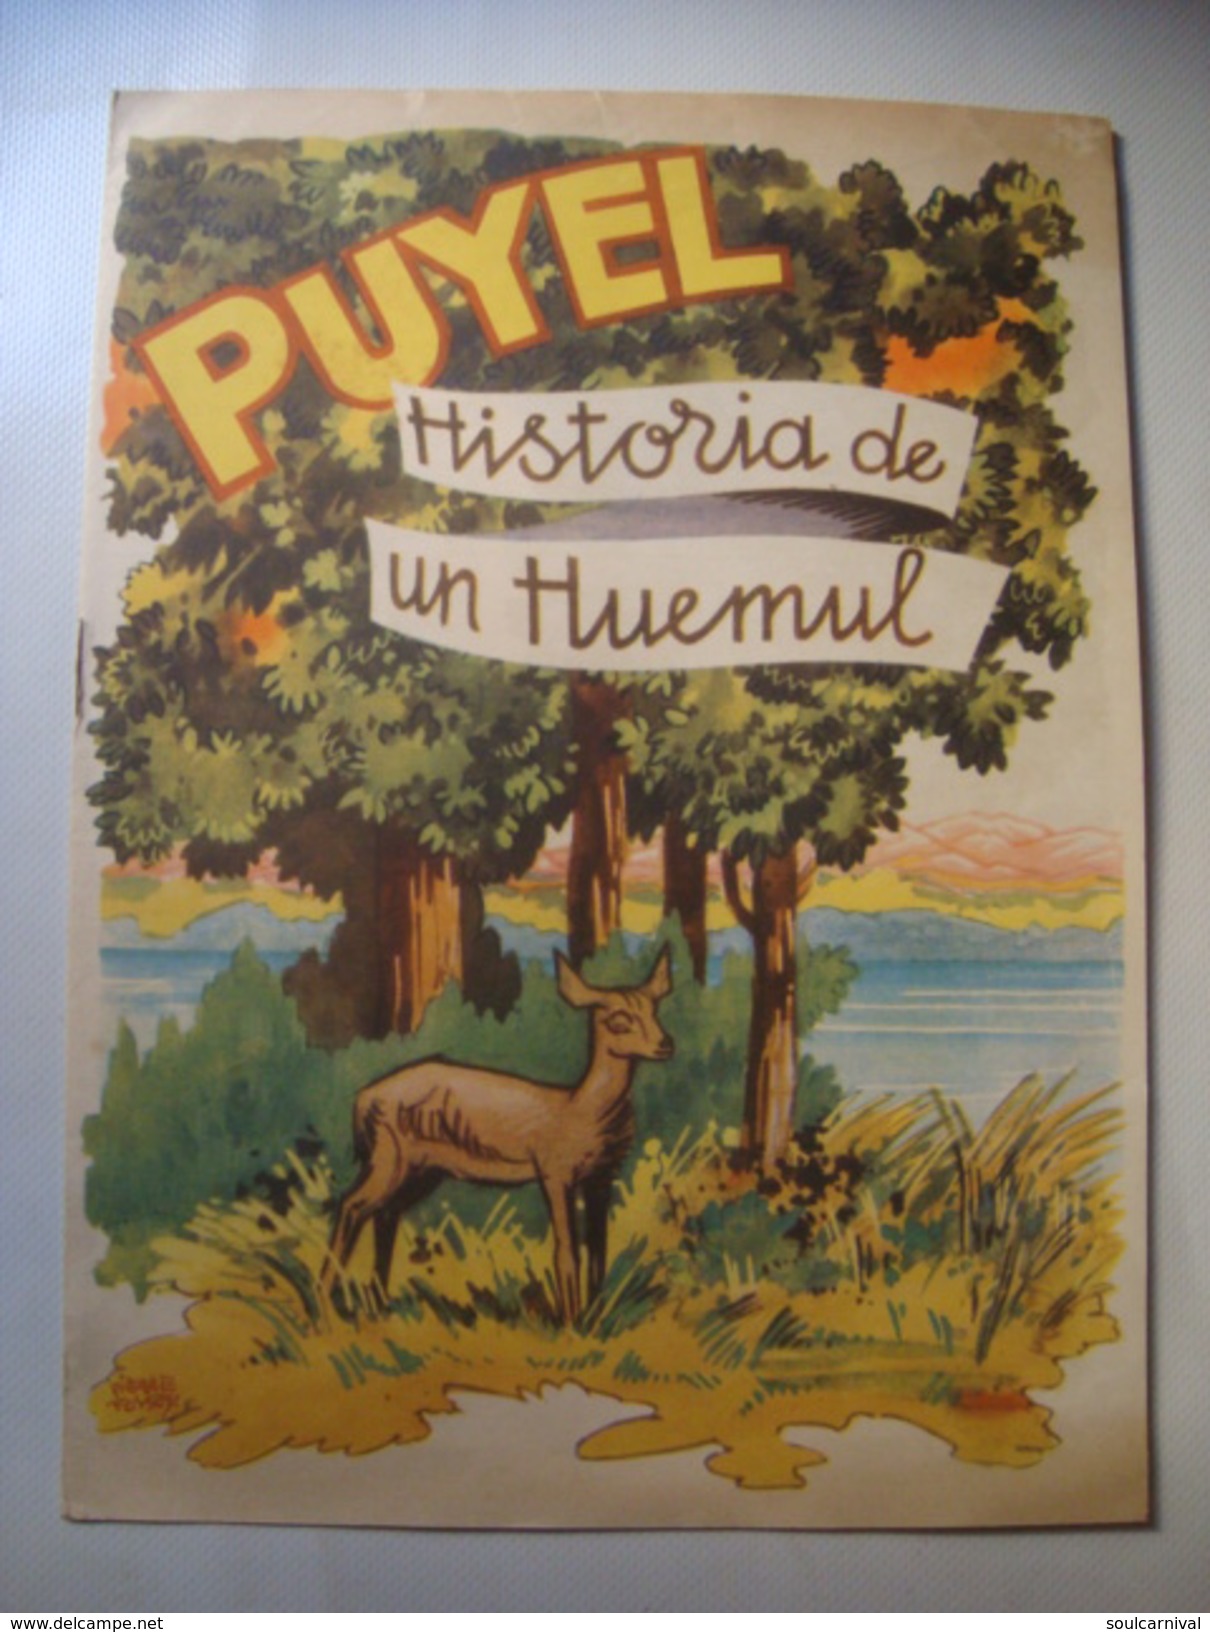 PUYEL. HISTORIA DE UN HUEMUL - ARGENTINA, DIRECCION DE TURISMO Y PARQUES, 1950 APROX. BY PIERRE FOSSEY. - Libri Bambini E Ragazzi